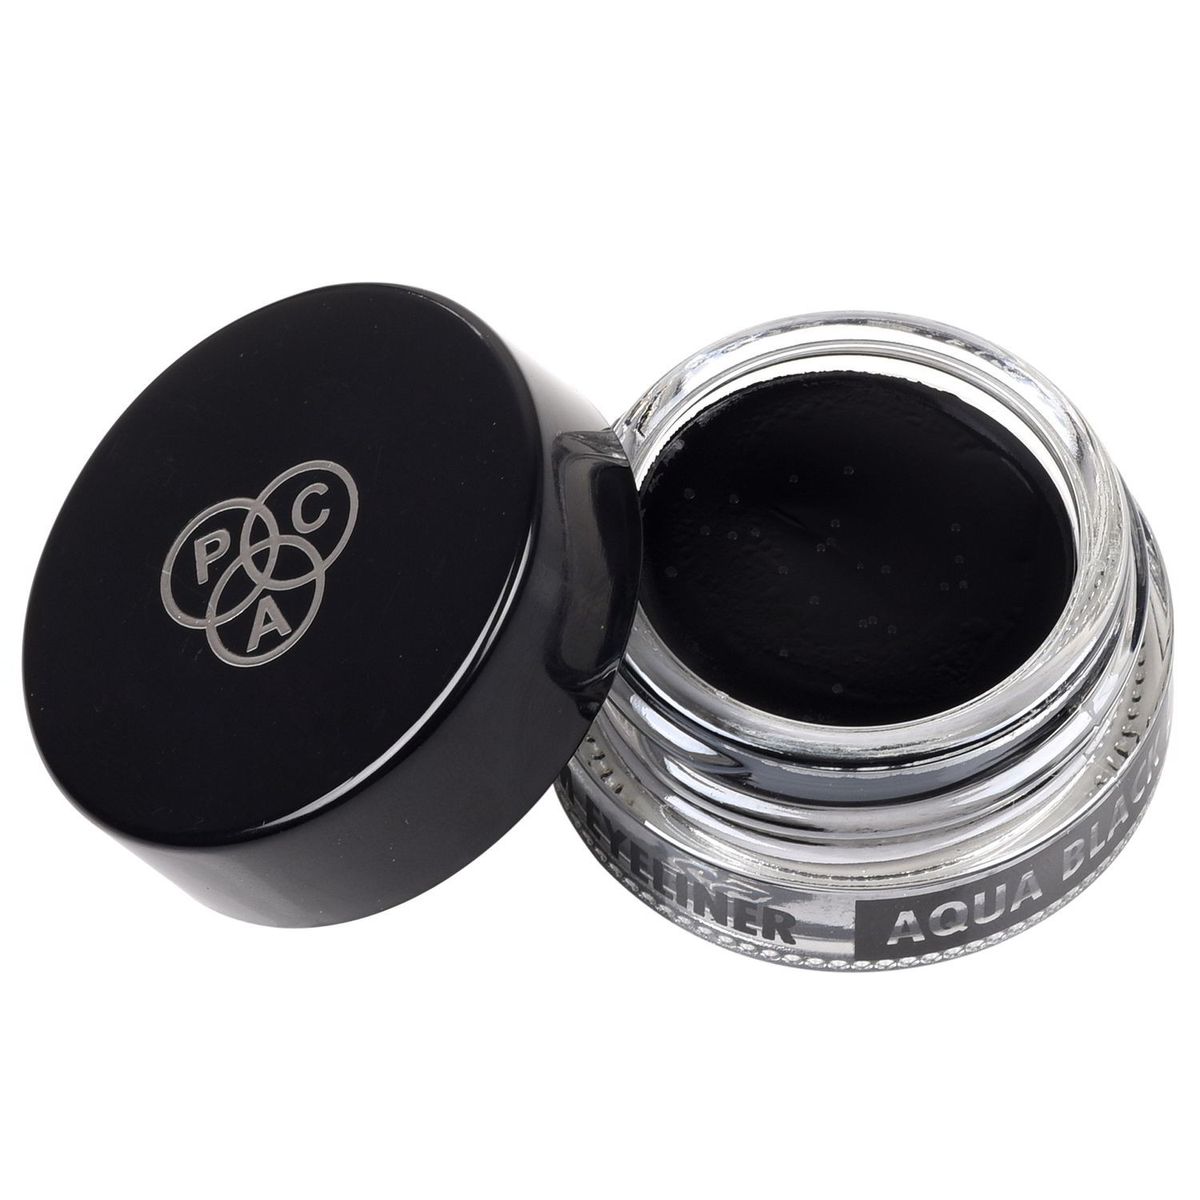 PAC Cream Eyeliner - Aqua Black (6gm) PAC